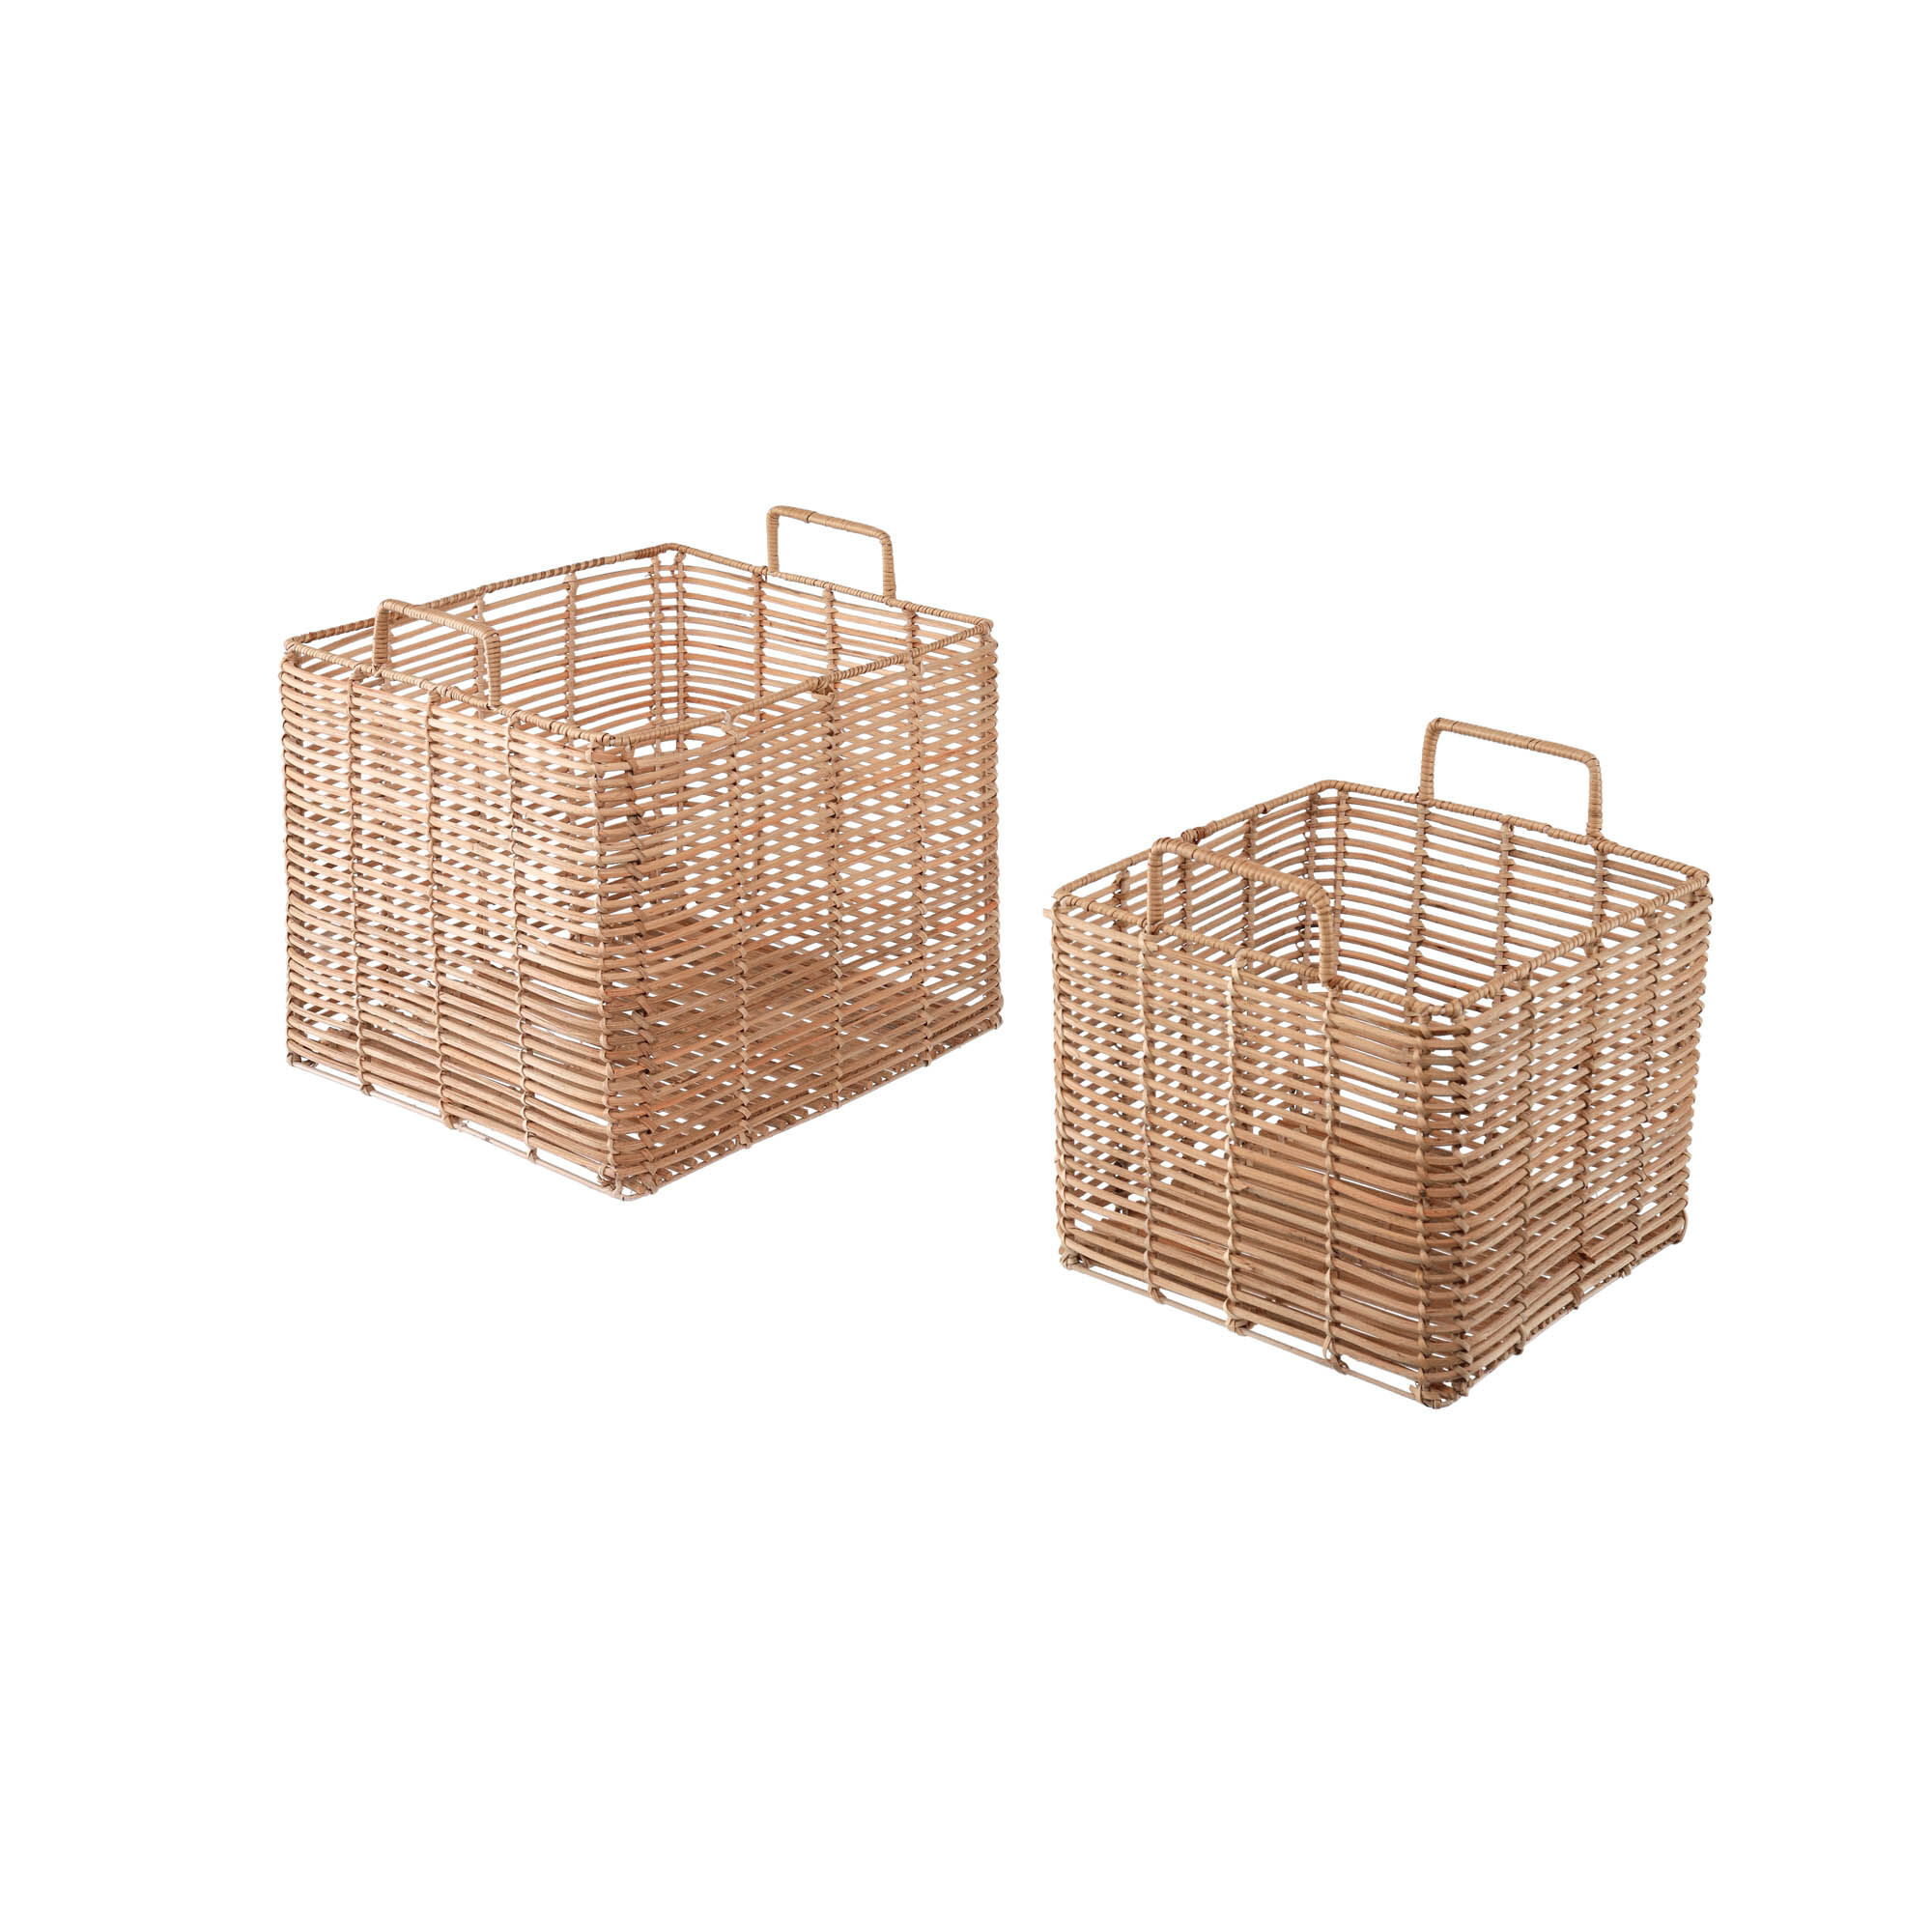 Kave Home Dalina set of 2 square 100% rattan baskets